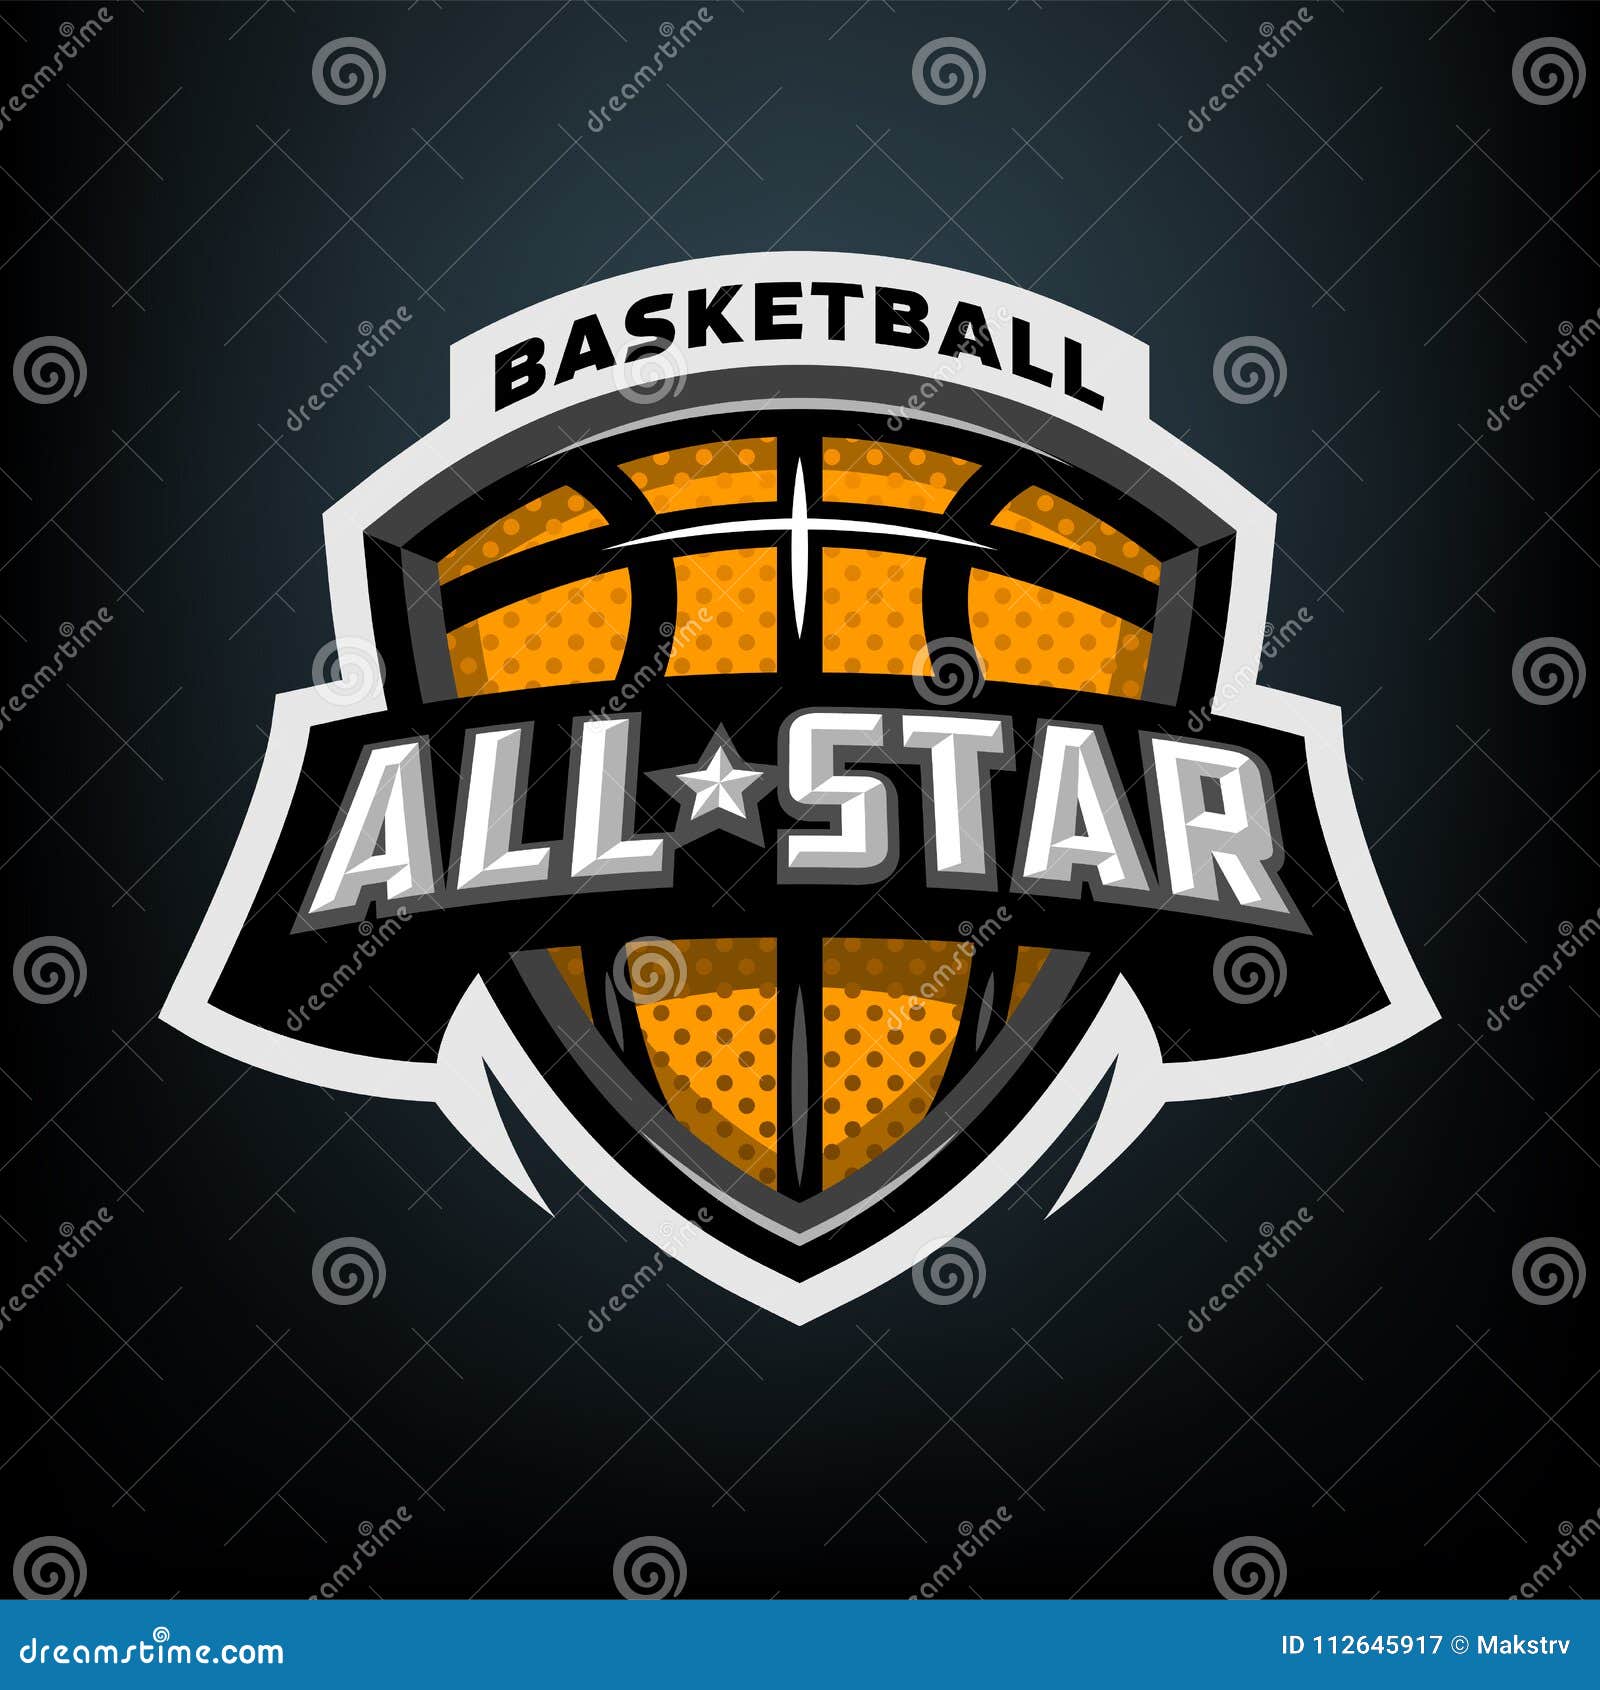 all star basketball, sports logo emblem.